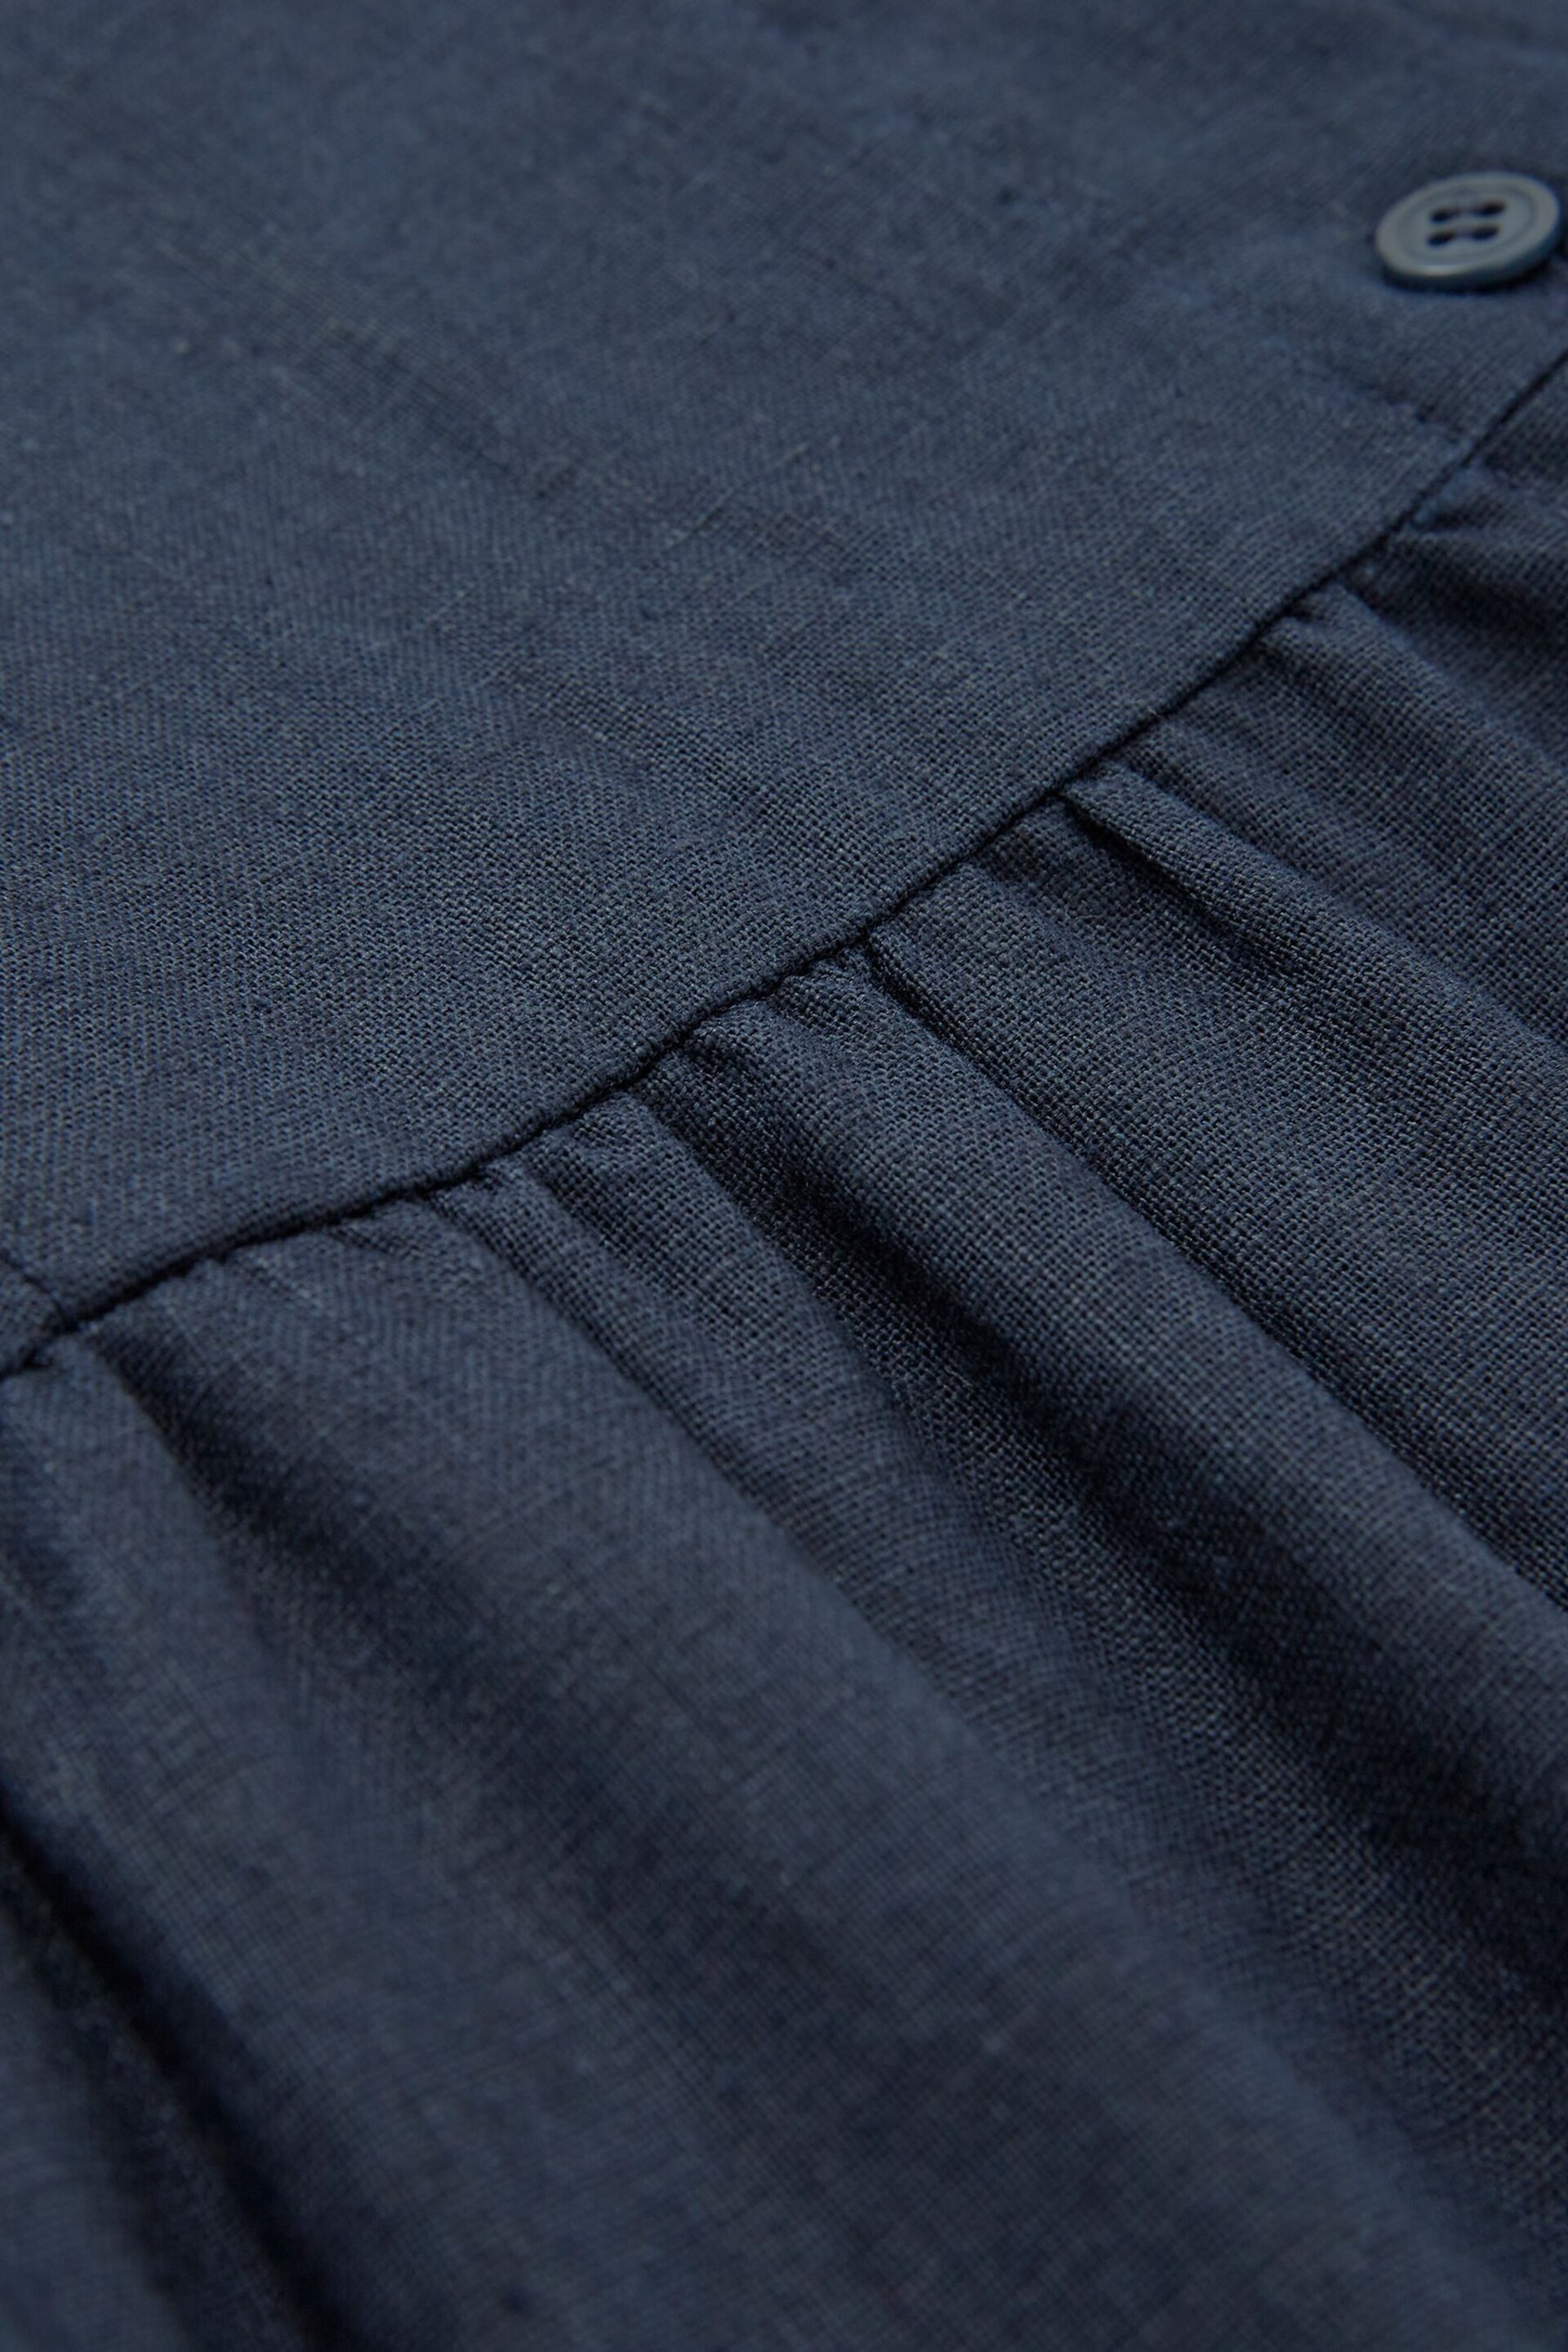 Celtic & Co. Blue Linen Tiered Midi Dresses - Image 5 of 7